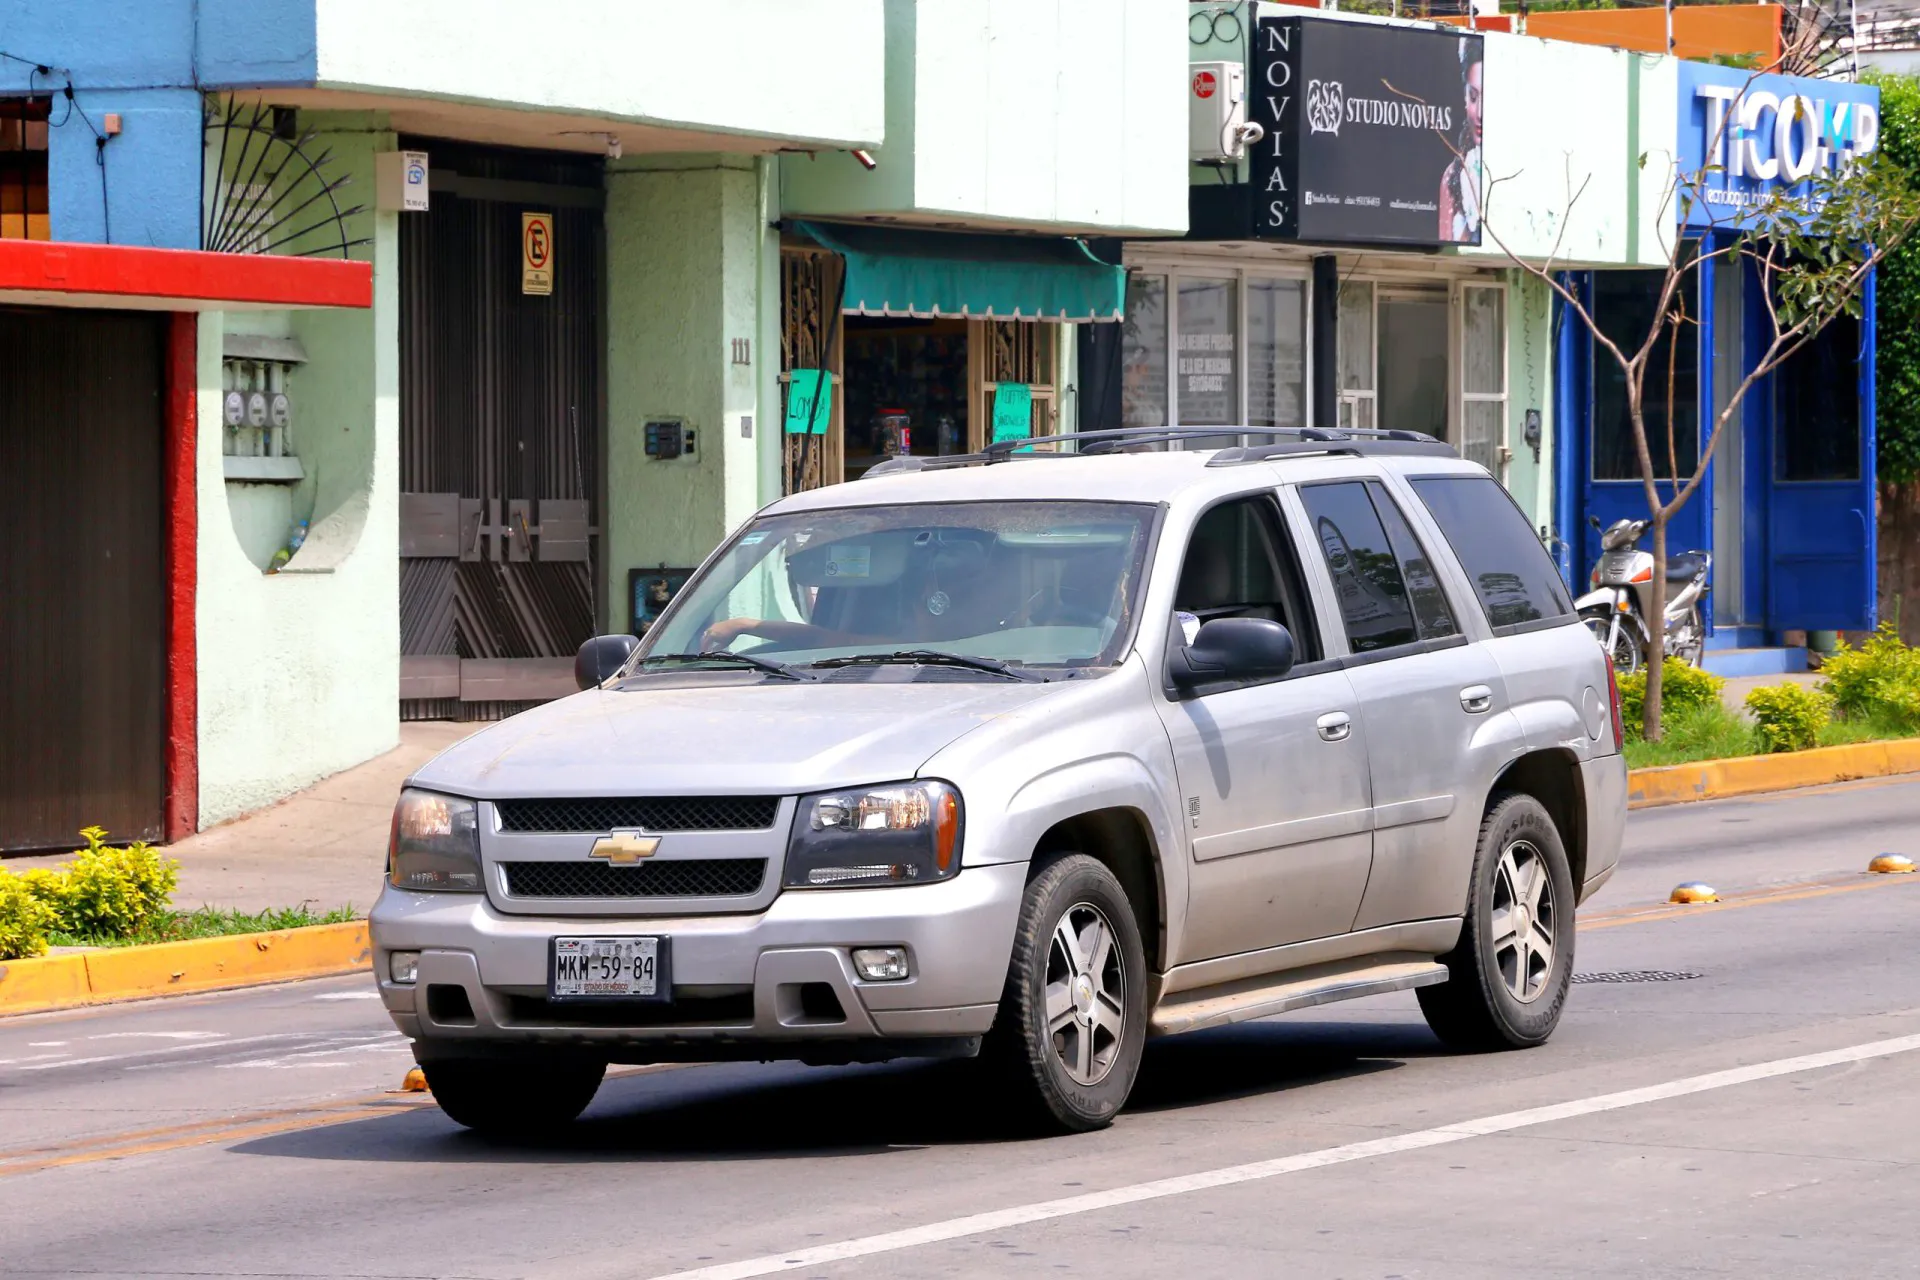 2008 Chevrolet TrailBlazer in the city street.